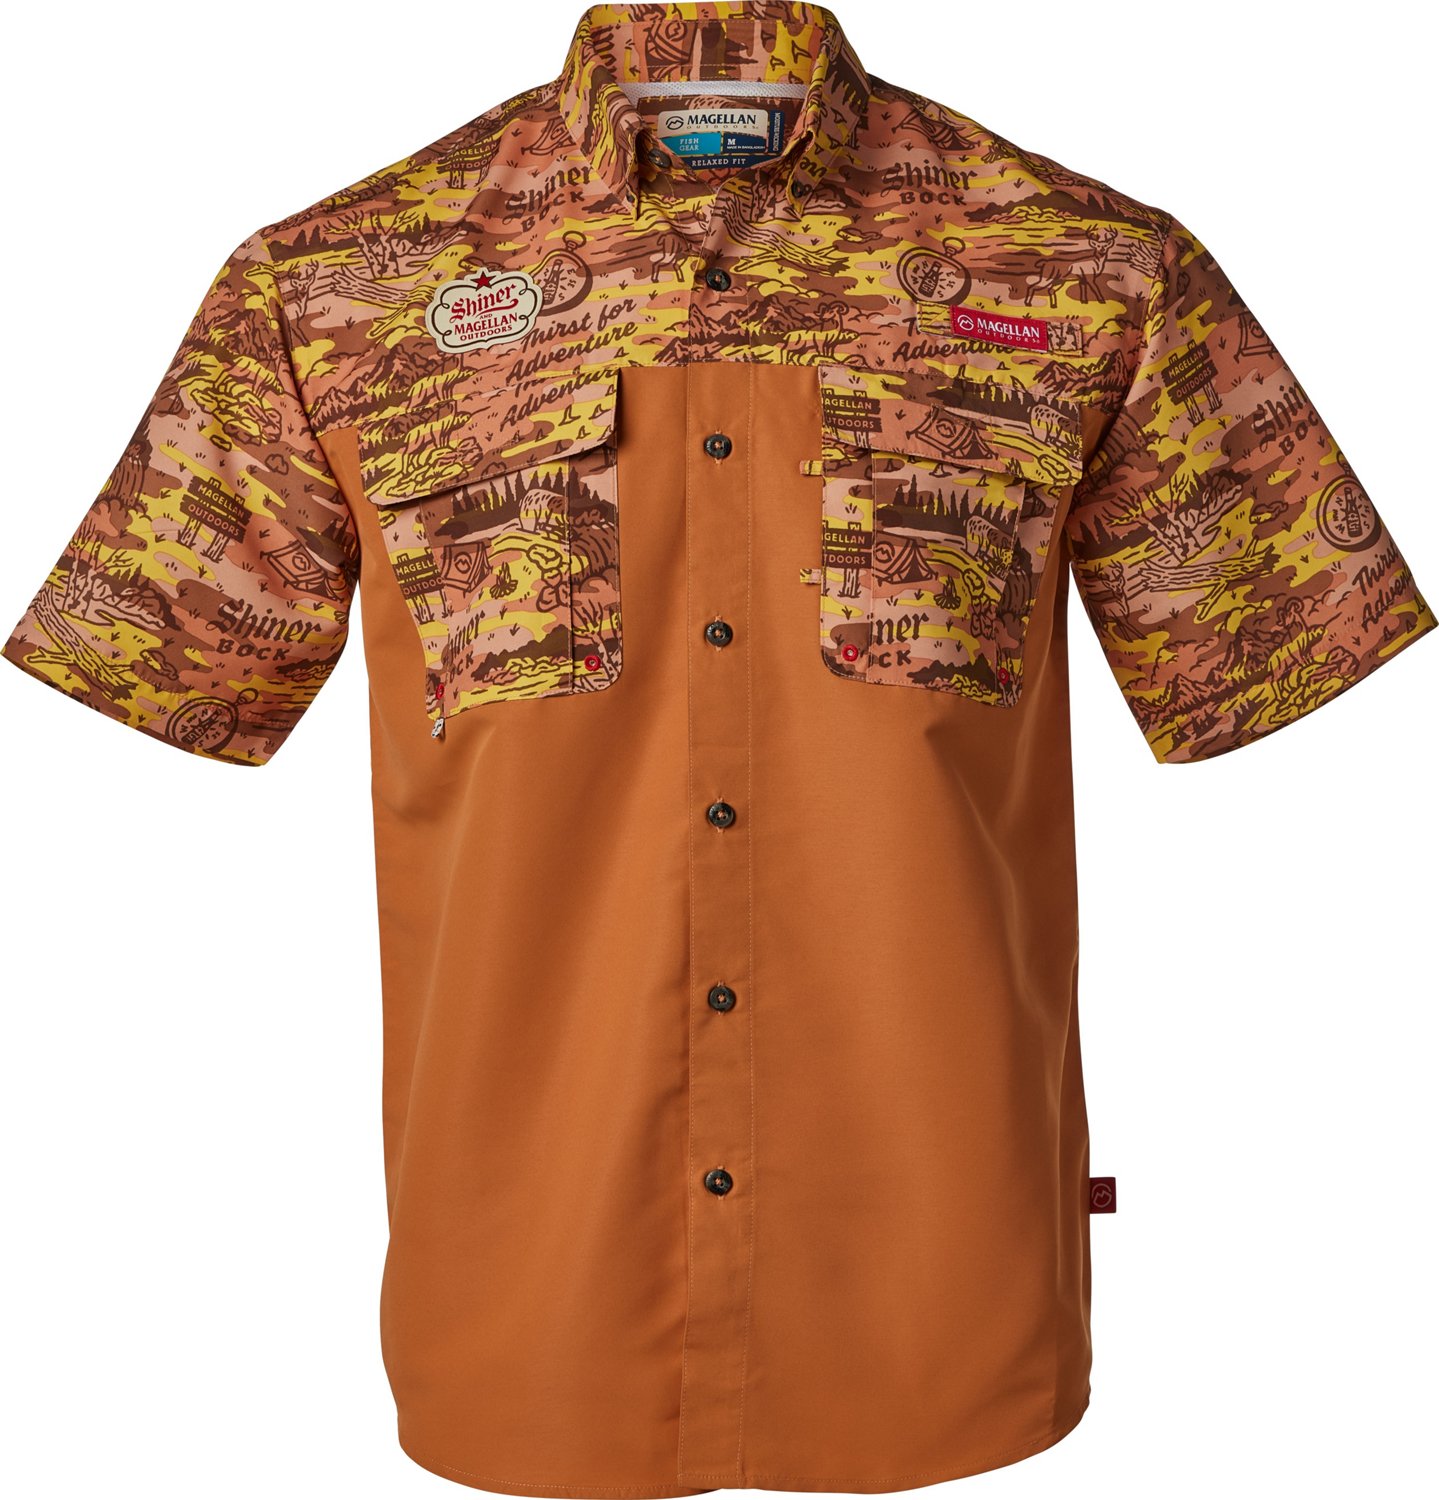 Magellan Outdoors Shiner Men's Laguna Madre Short Sleeve Fishing Shirt only  $11.98